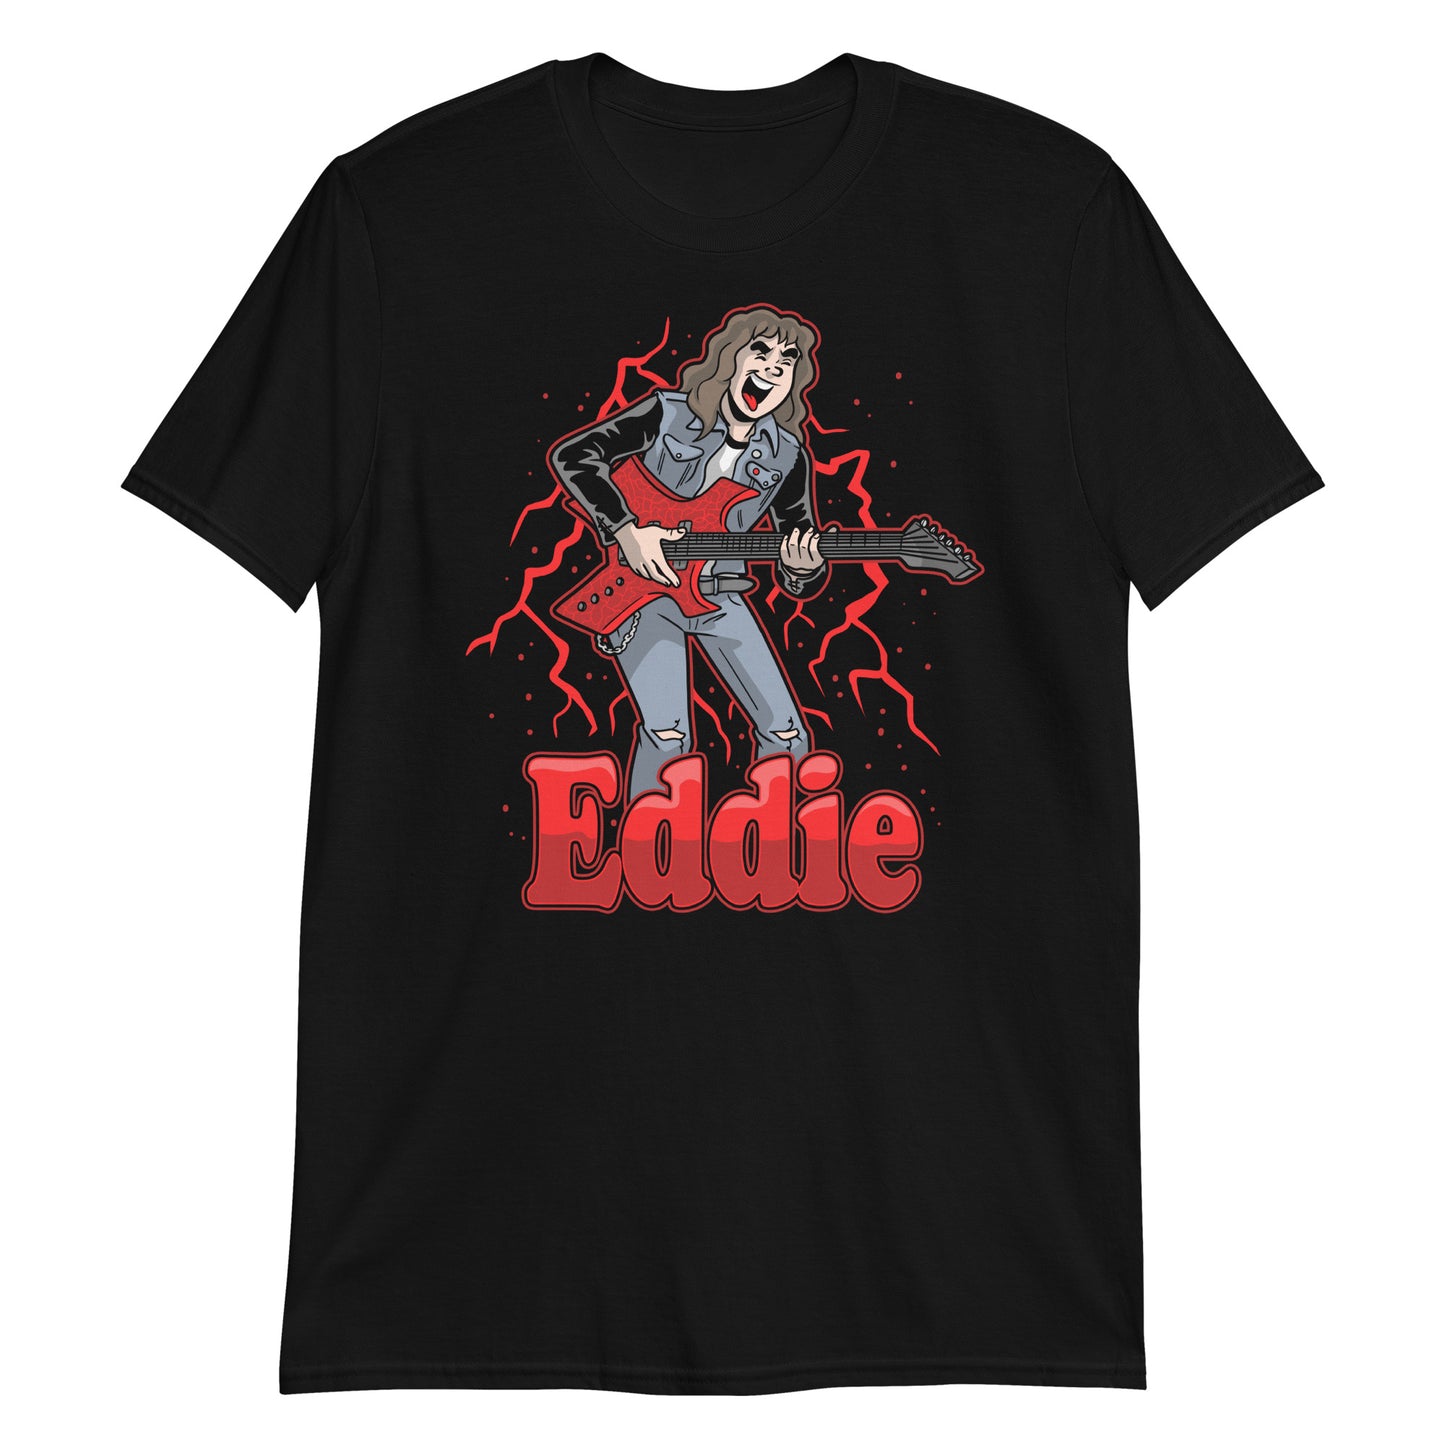 Eddie Comics t-shirt